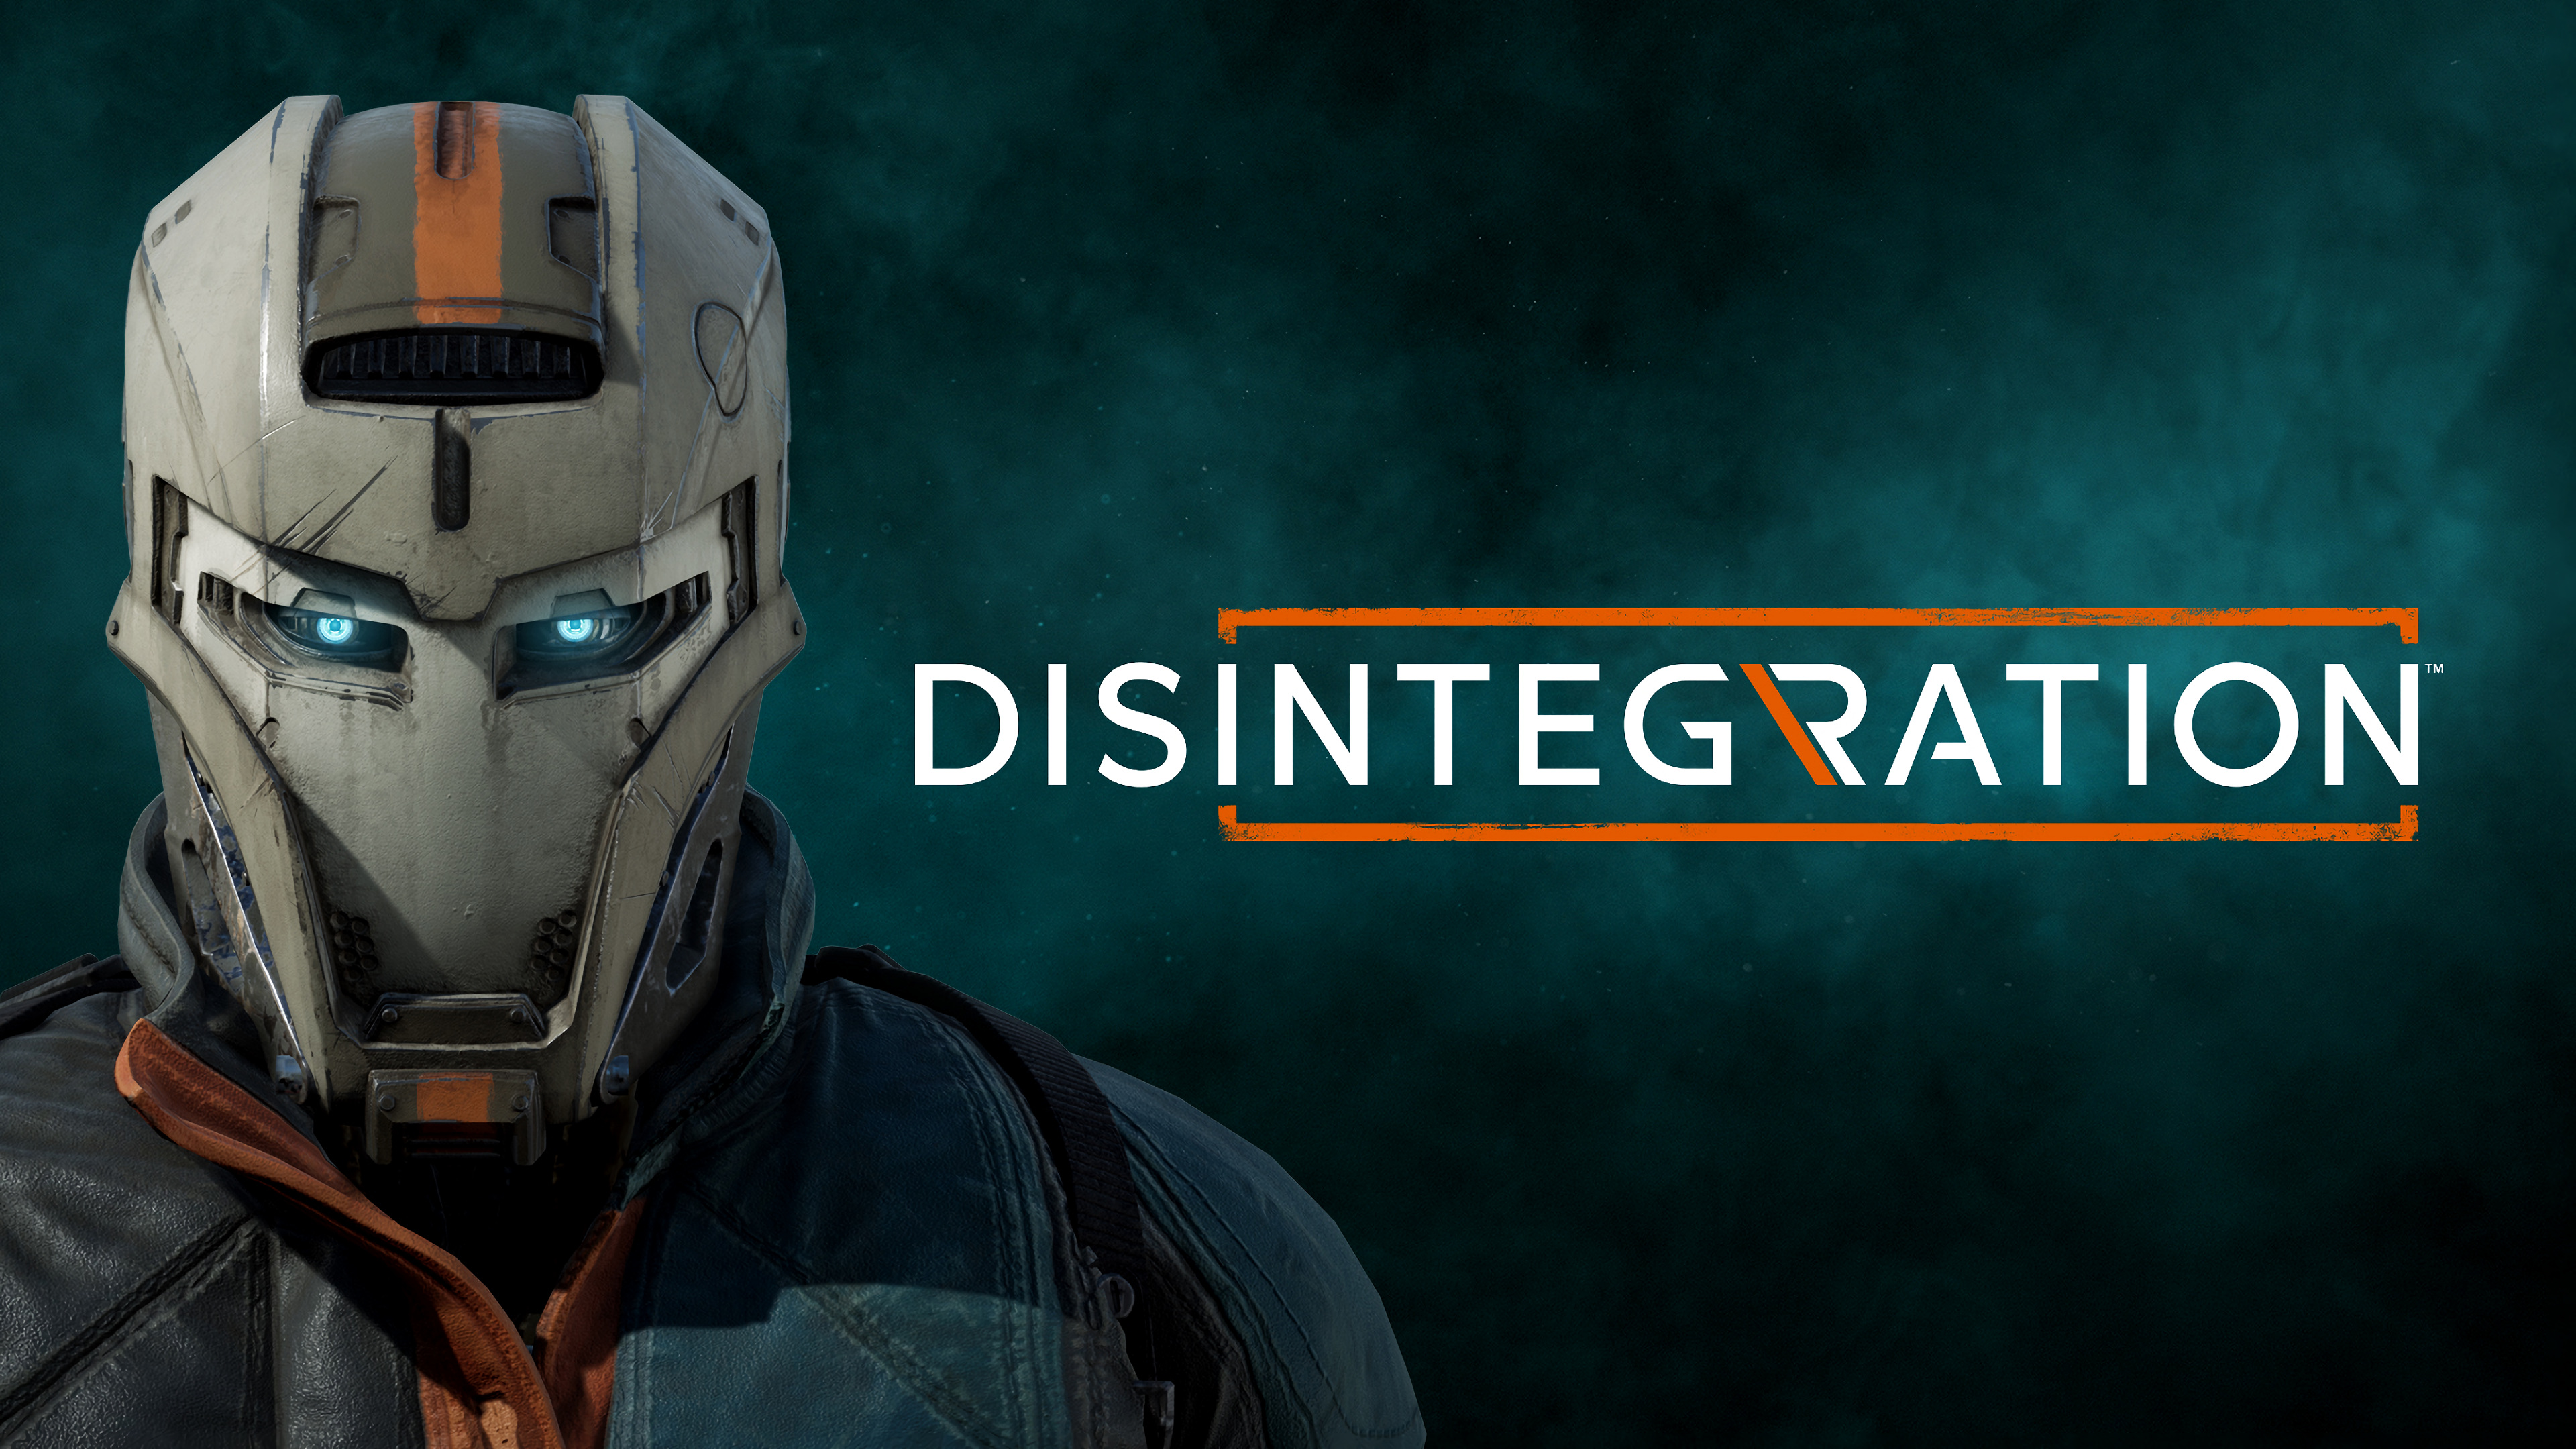 Disintegration 2020 4k, HD Games, 4k Wallpaper, Image